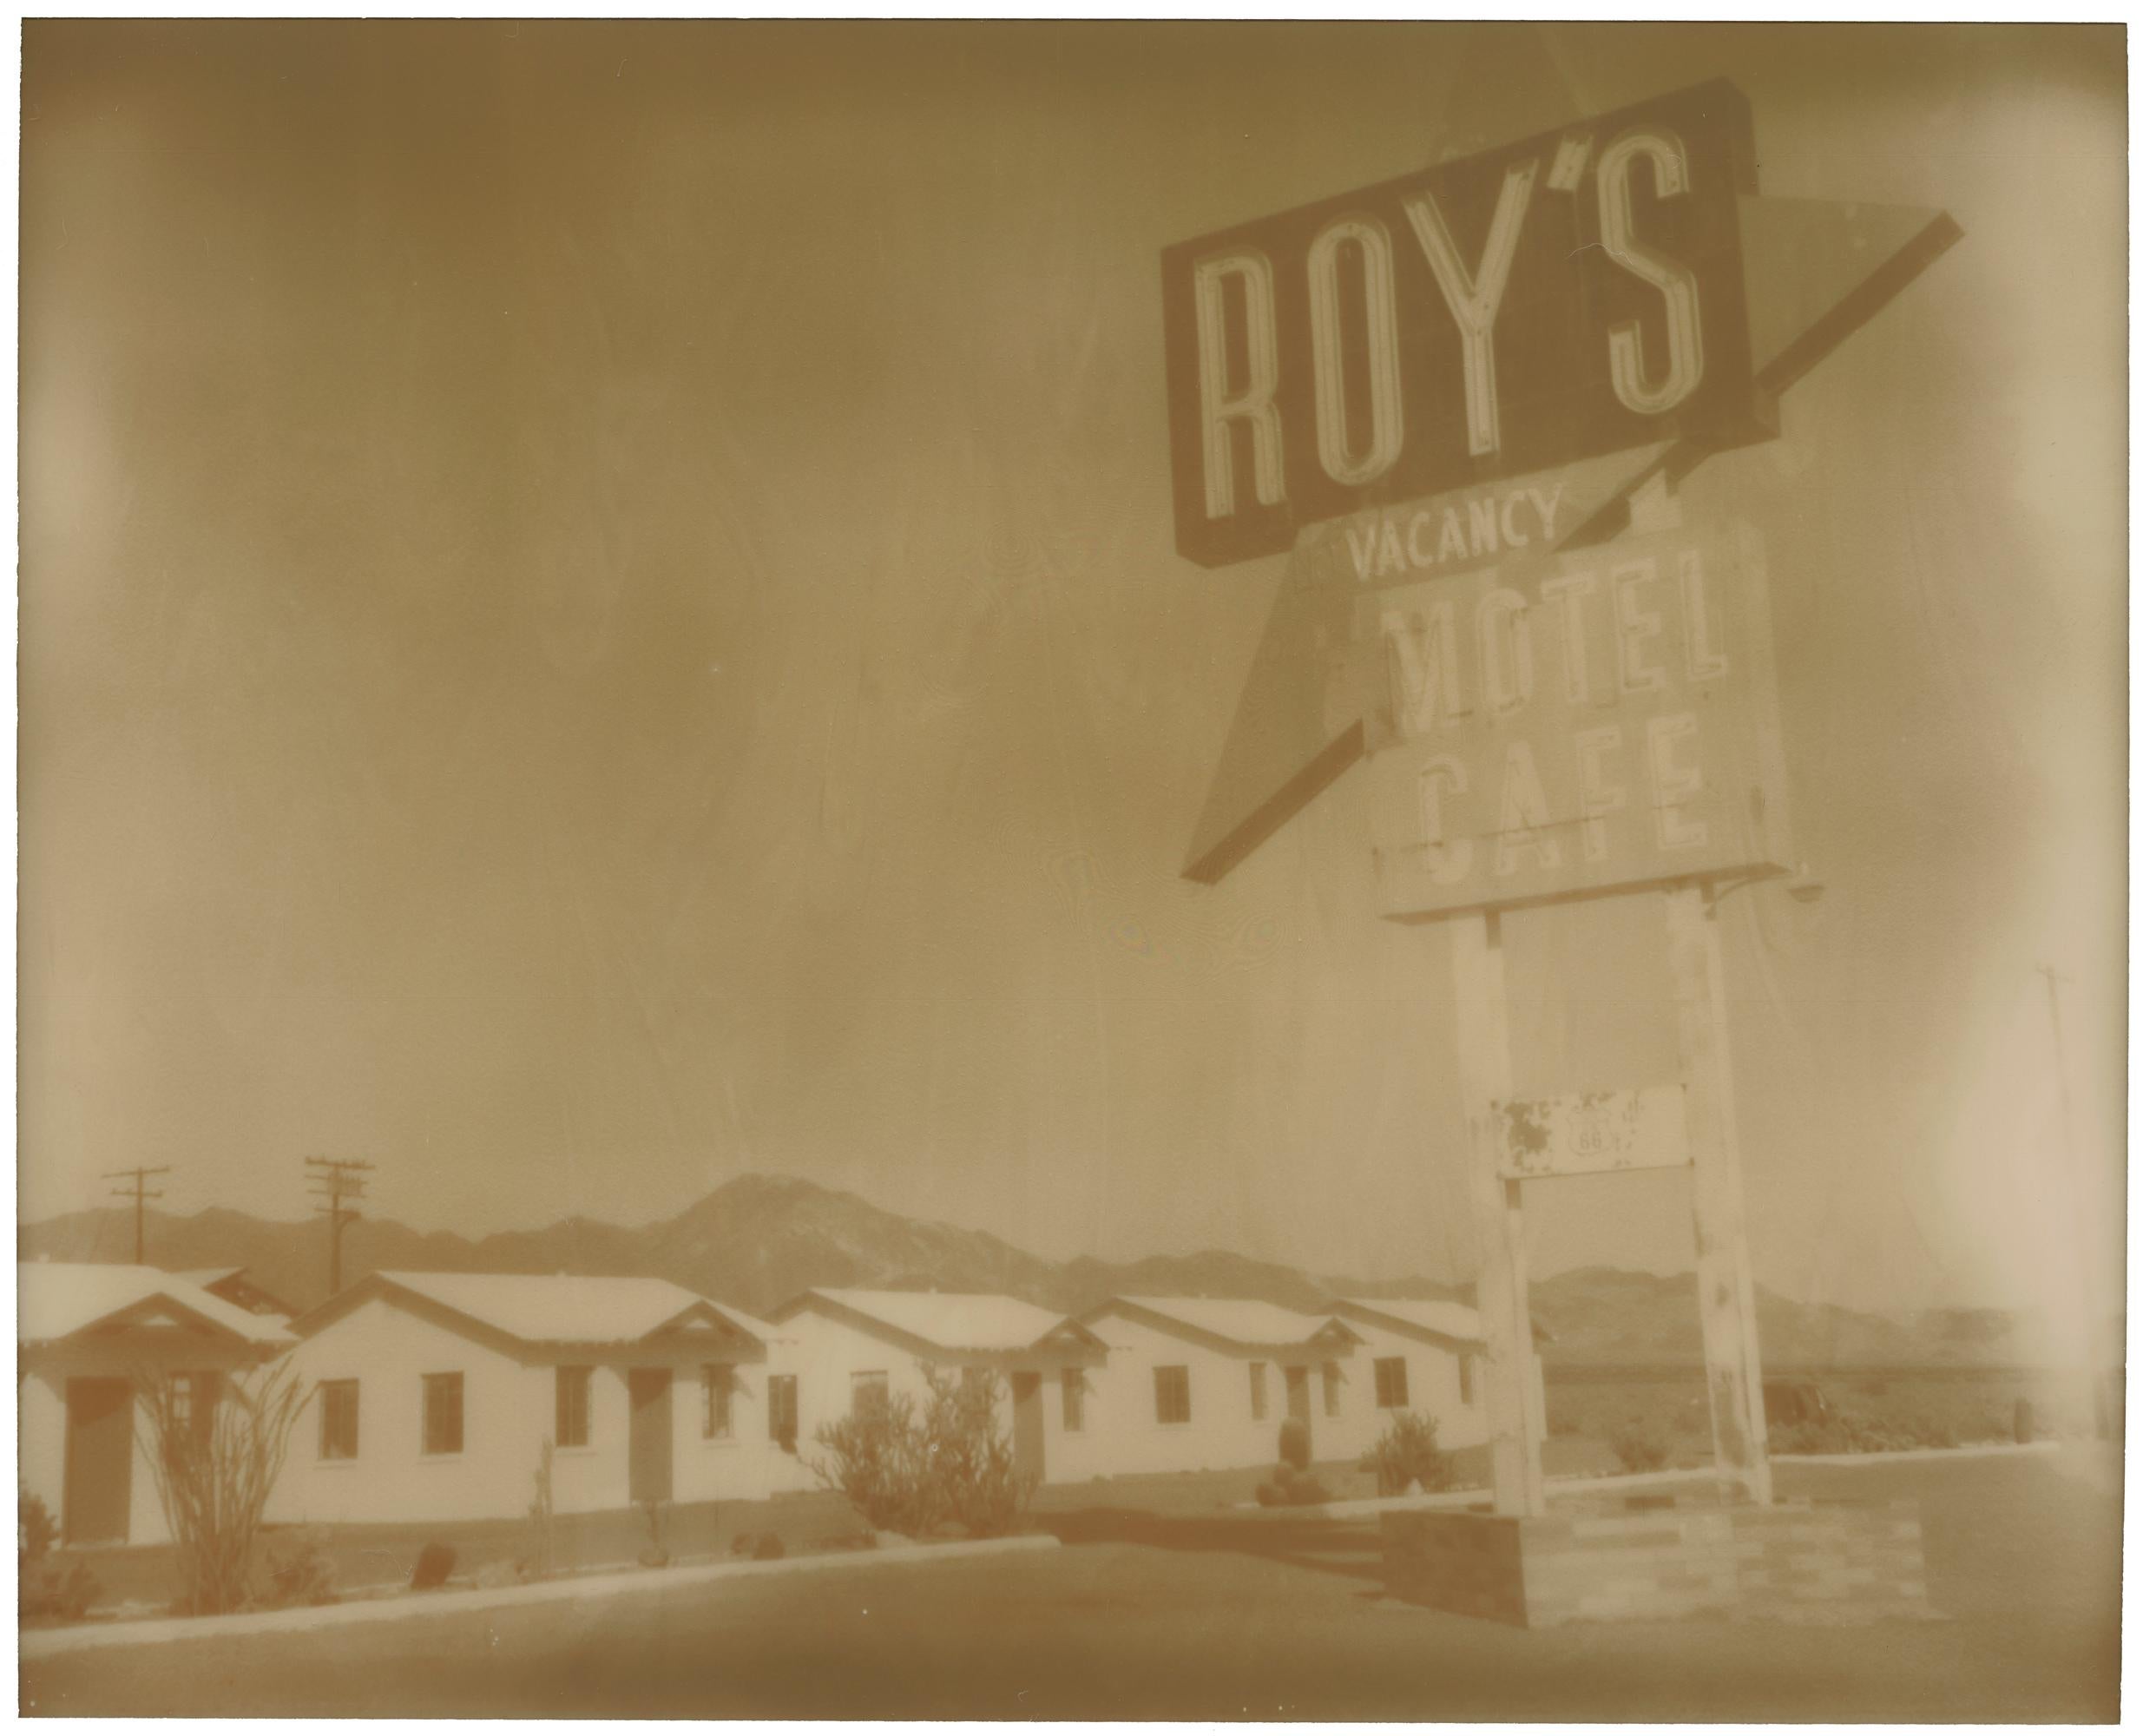 Stefanie Schneider Black and White Photograph - Roys (California Badlands) - Contemporary, Polaroid, Landscape